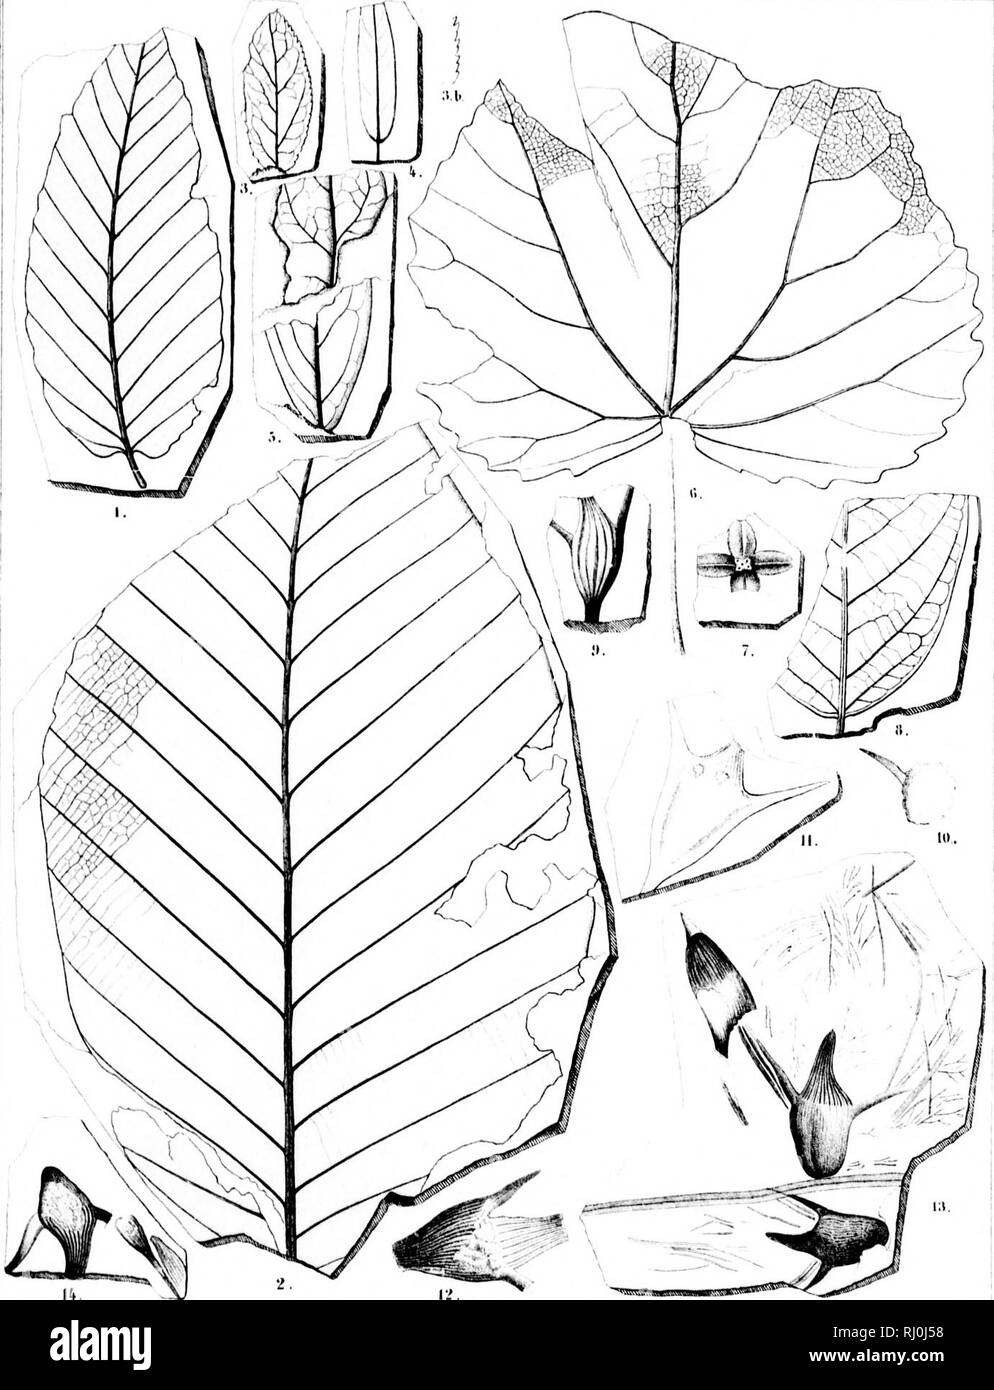 . Flora fossilis Alaskana [microform] = Fossile Flora von Alaska. Paleobotany; PalÃ©obotanique. .i. ir'i' Ai;iil sni'ill Siinir.f T VIII S&quot; '* ^ -â I r (Im&gt; llnr IIm,., ,|,,sk h, VIII,. Kpi-I Ki'^ii-AMli|iiili v;ii'.:.' F.i'iiis Mi,u'iii|iluir.i .'&gt;. &gt;|iir.vi'.i .llll^l'^&quot;lll +..iii'iimiin KrM'&gt;ii .1. .iiilr'iini-f|:i liiMvaii.i. li.ili&gt; i'iriuil.i 7 i'i |liir&gt;|ivni Sli'ri'iM'li.ll.l ,1 |!&gt; Tl.ll'.l |lâ â |v:lil^. Please note that these images are extracted from scanned page images that may have been digitally enhanced for readability - coloration and app Stock Photo